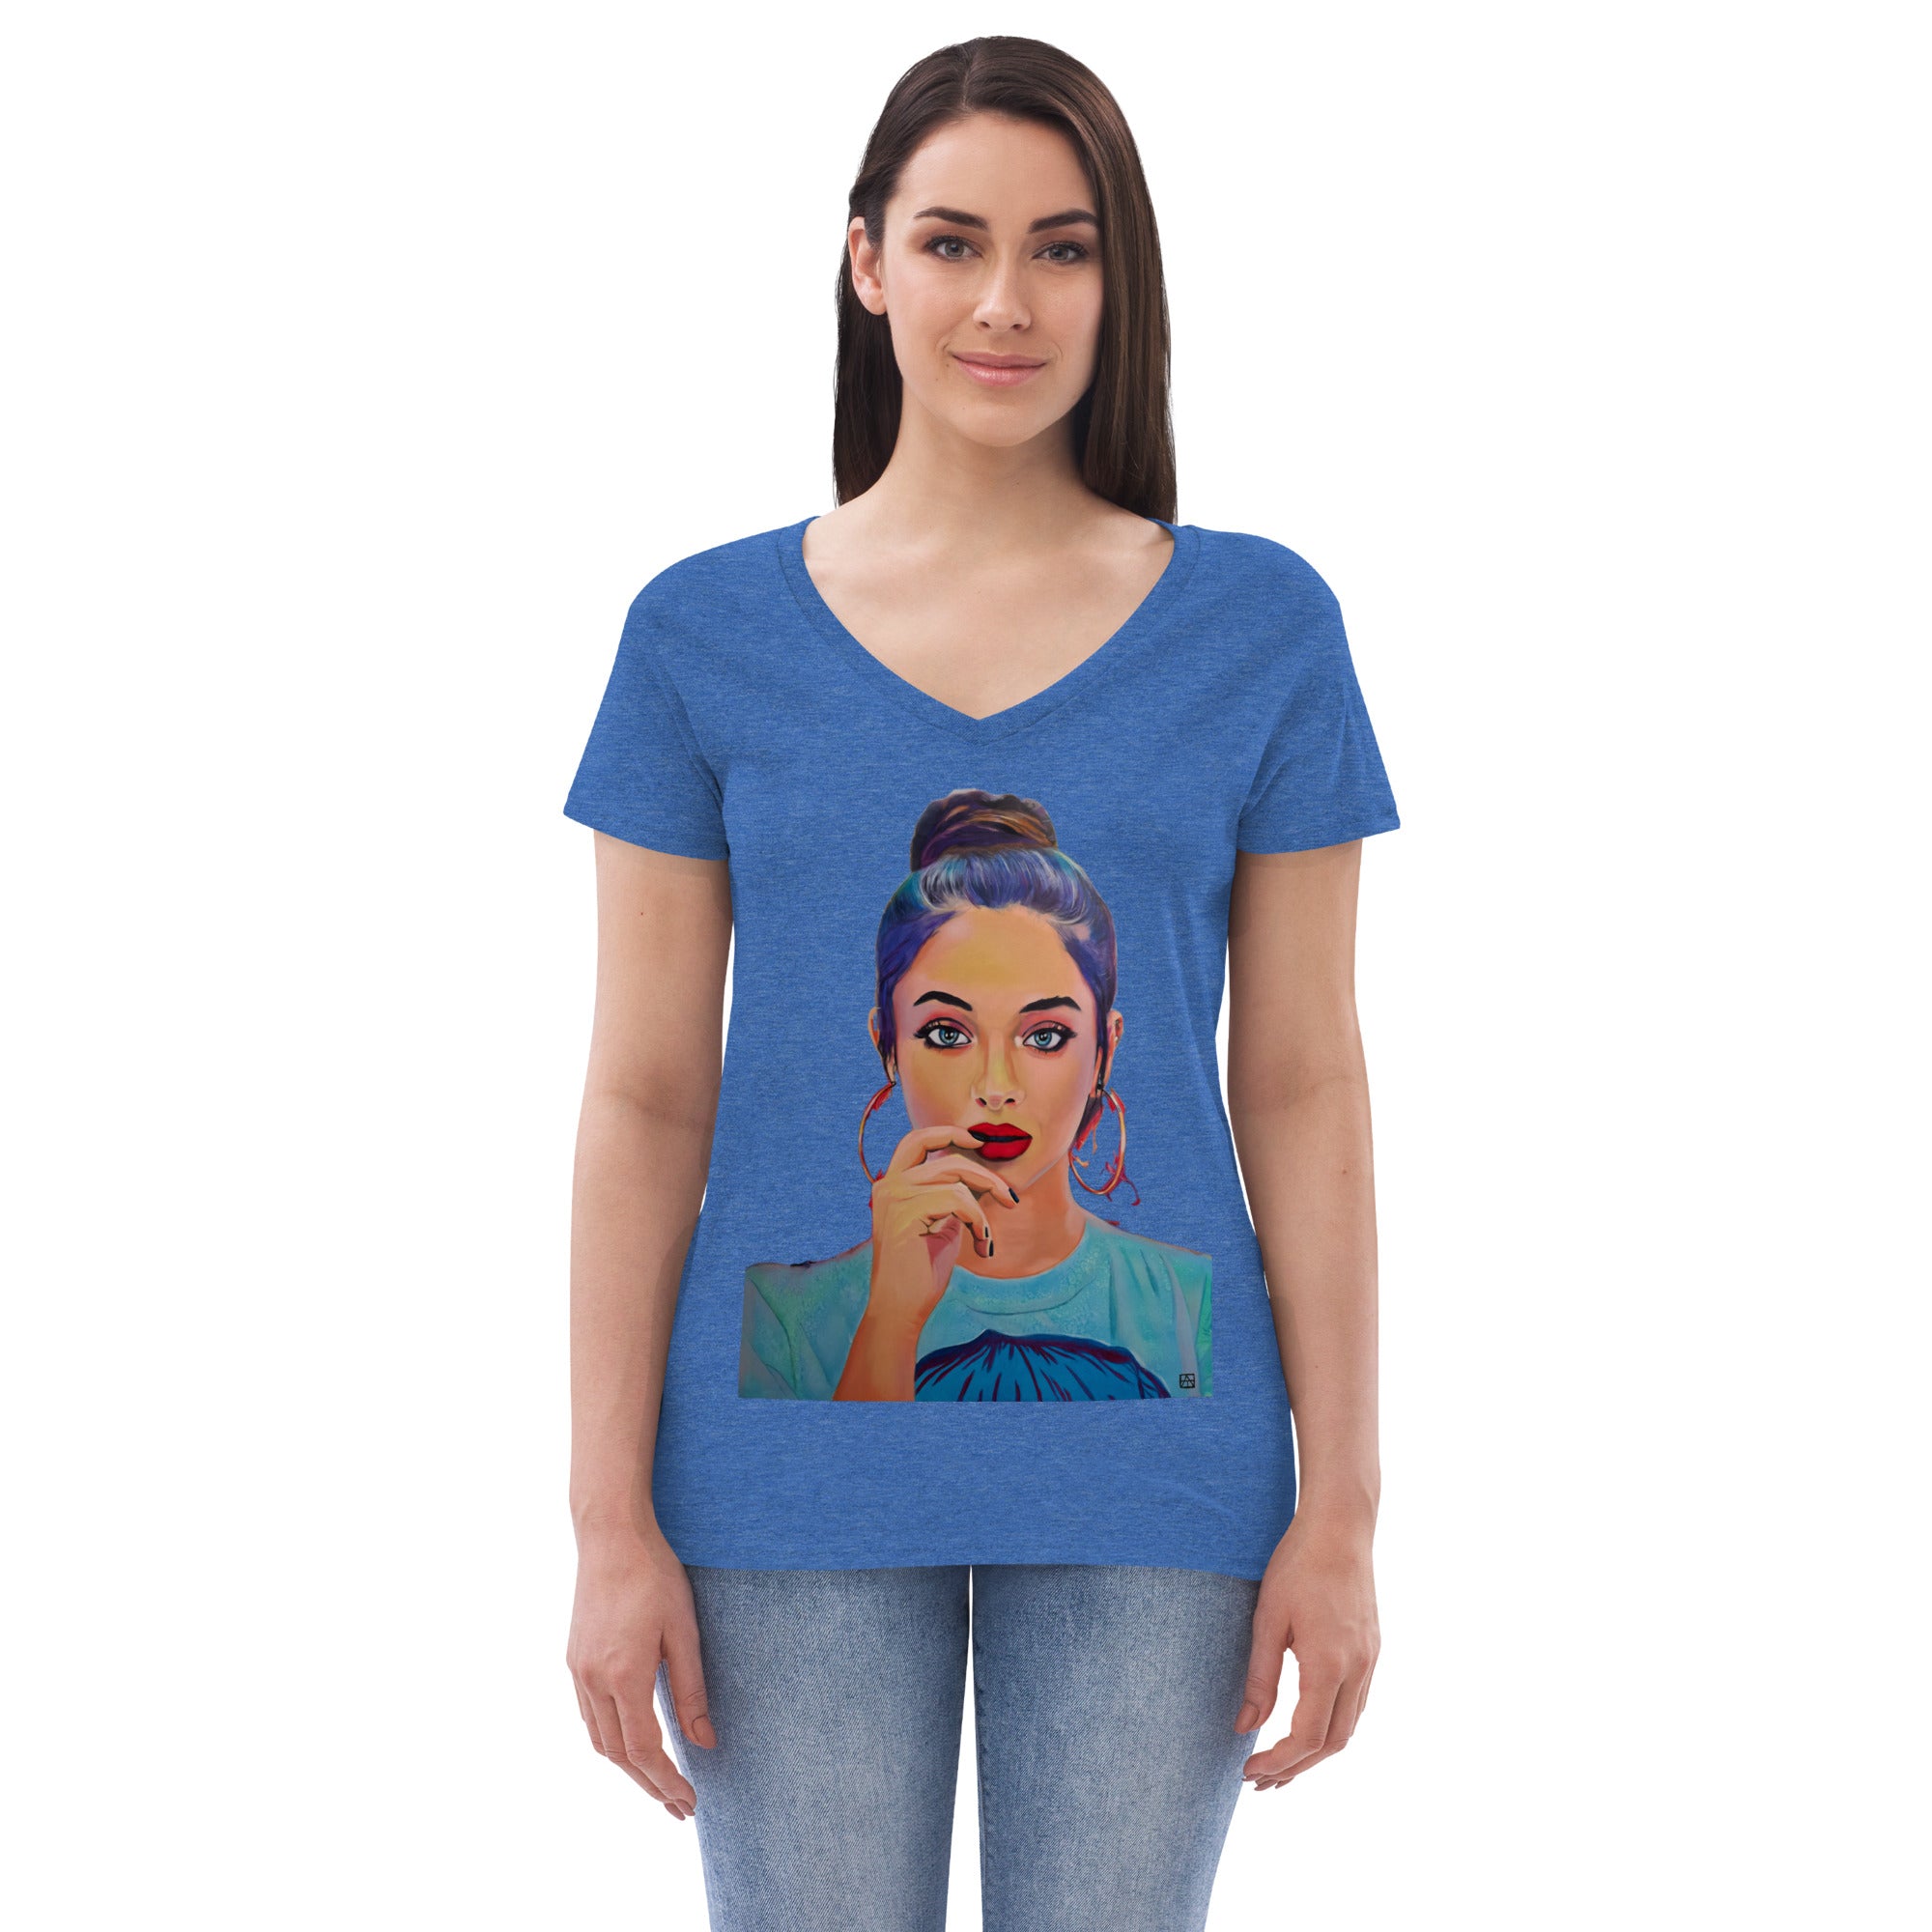 Extra Ordinary Women’s recycled v-neck t-shirt